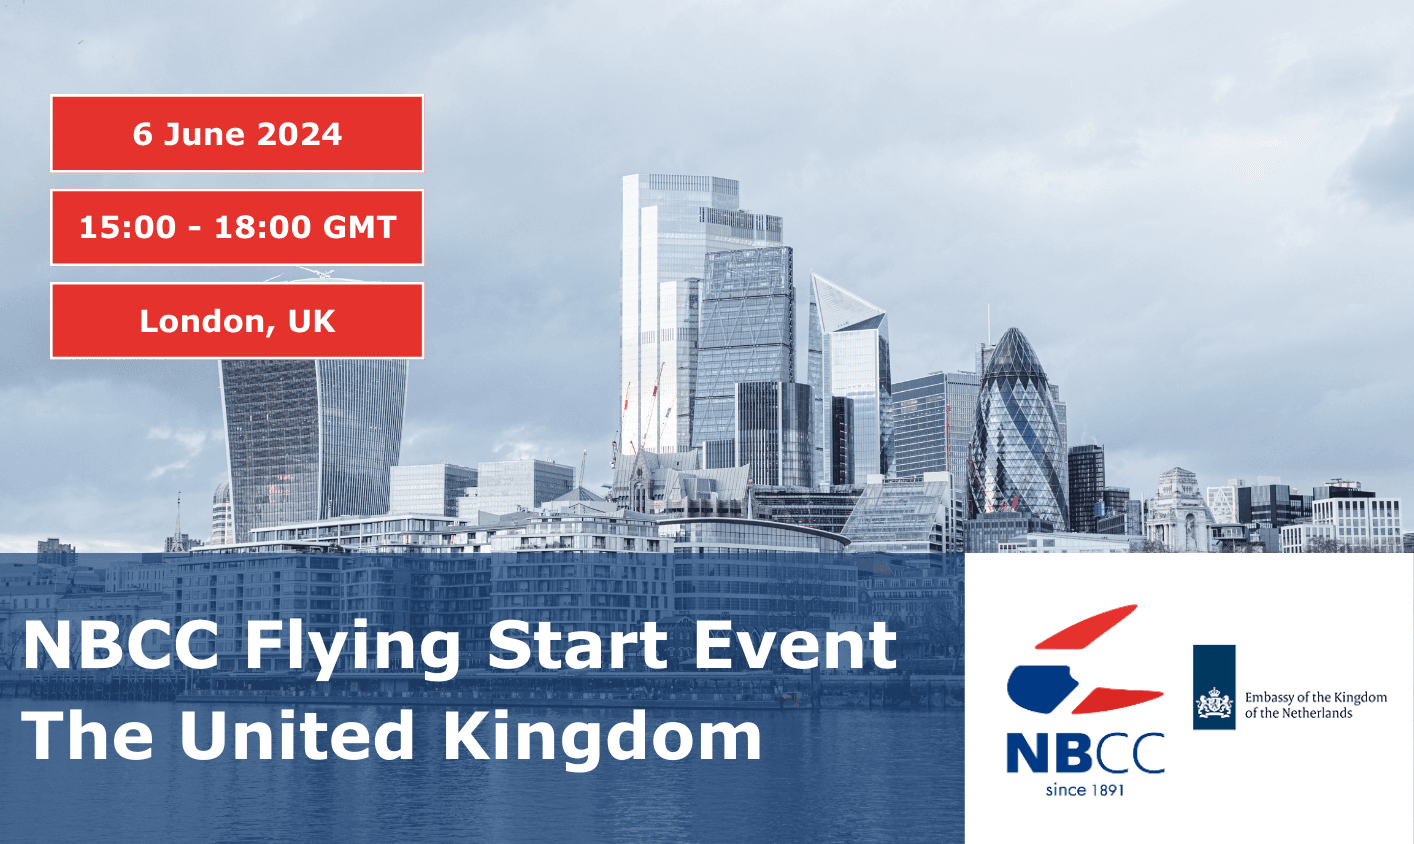 NBCC Flying Start Event The United Kingdom